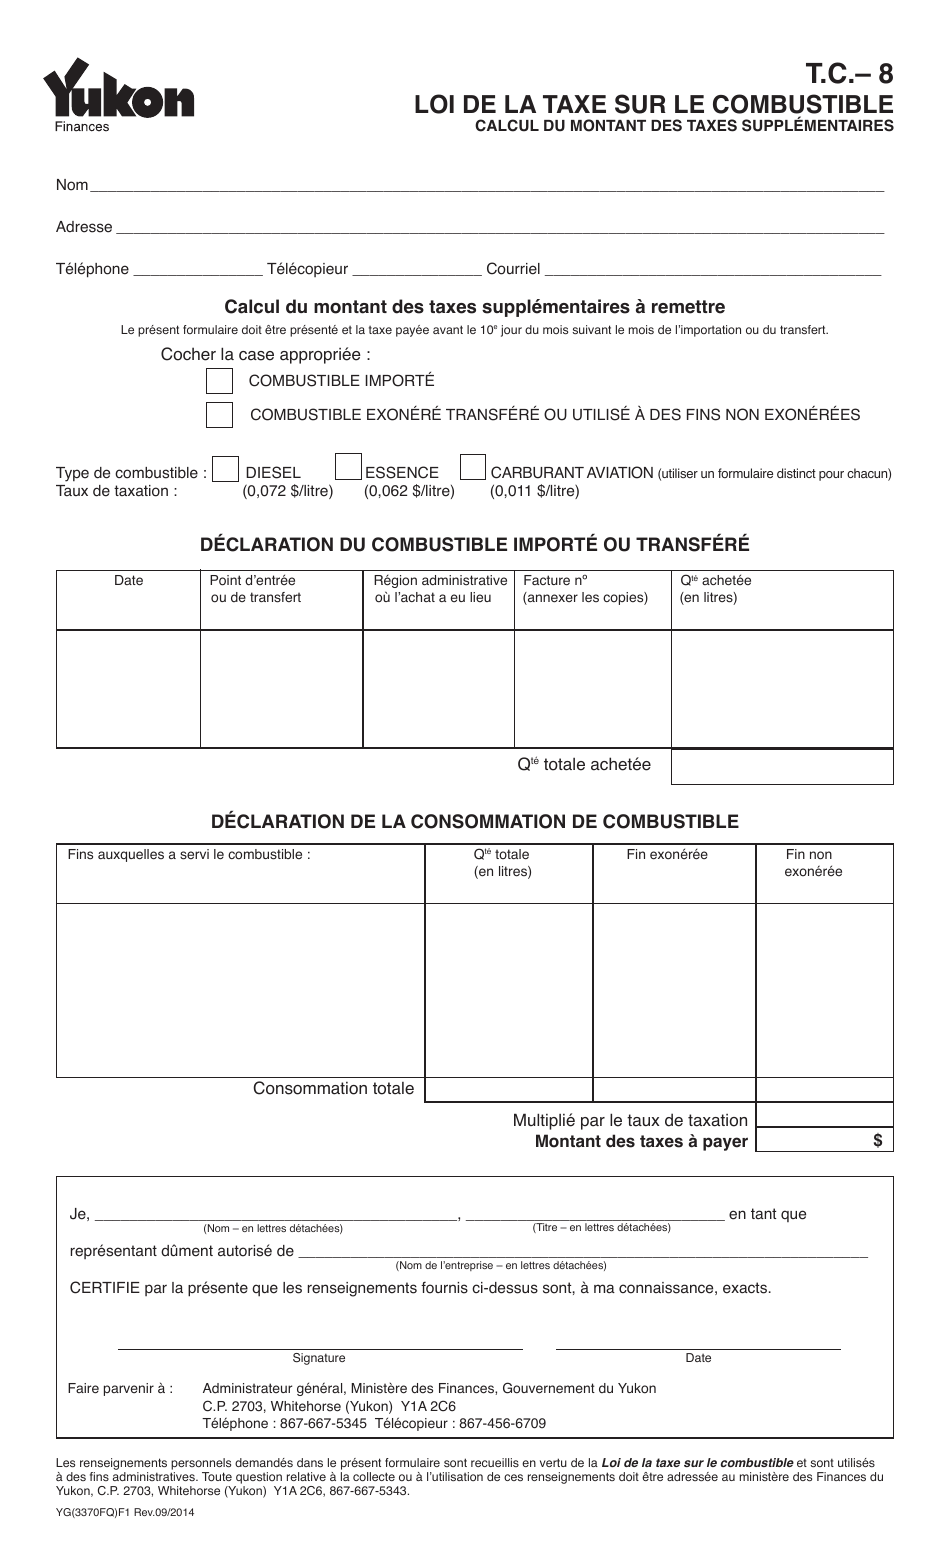 Forme YG3370 Loi De La Taxe Sur Le Combustible - Demande 8 - Yukon, Canada (French), Page 1